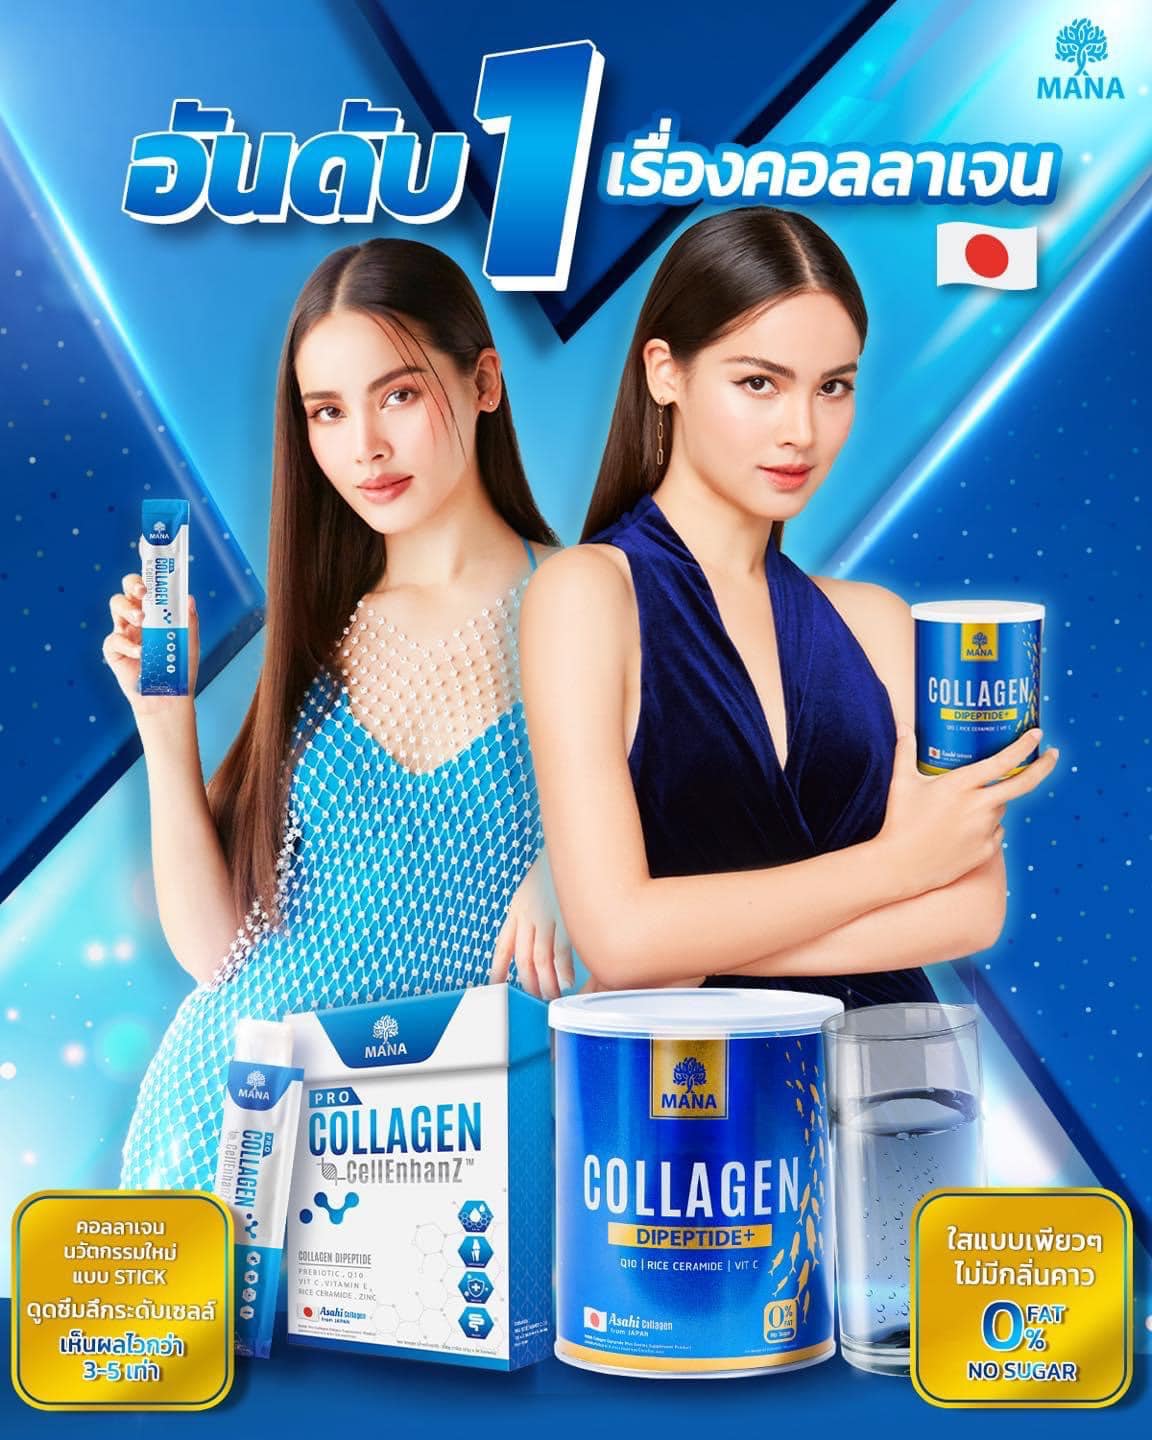 MANA Collagen นวัตกรรมคอลลาเจนที่เป็น 